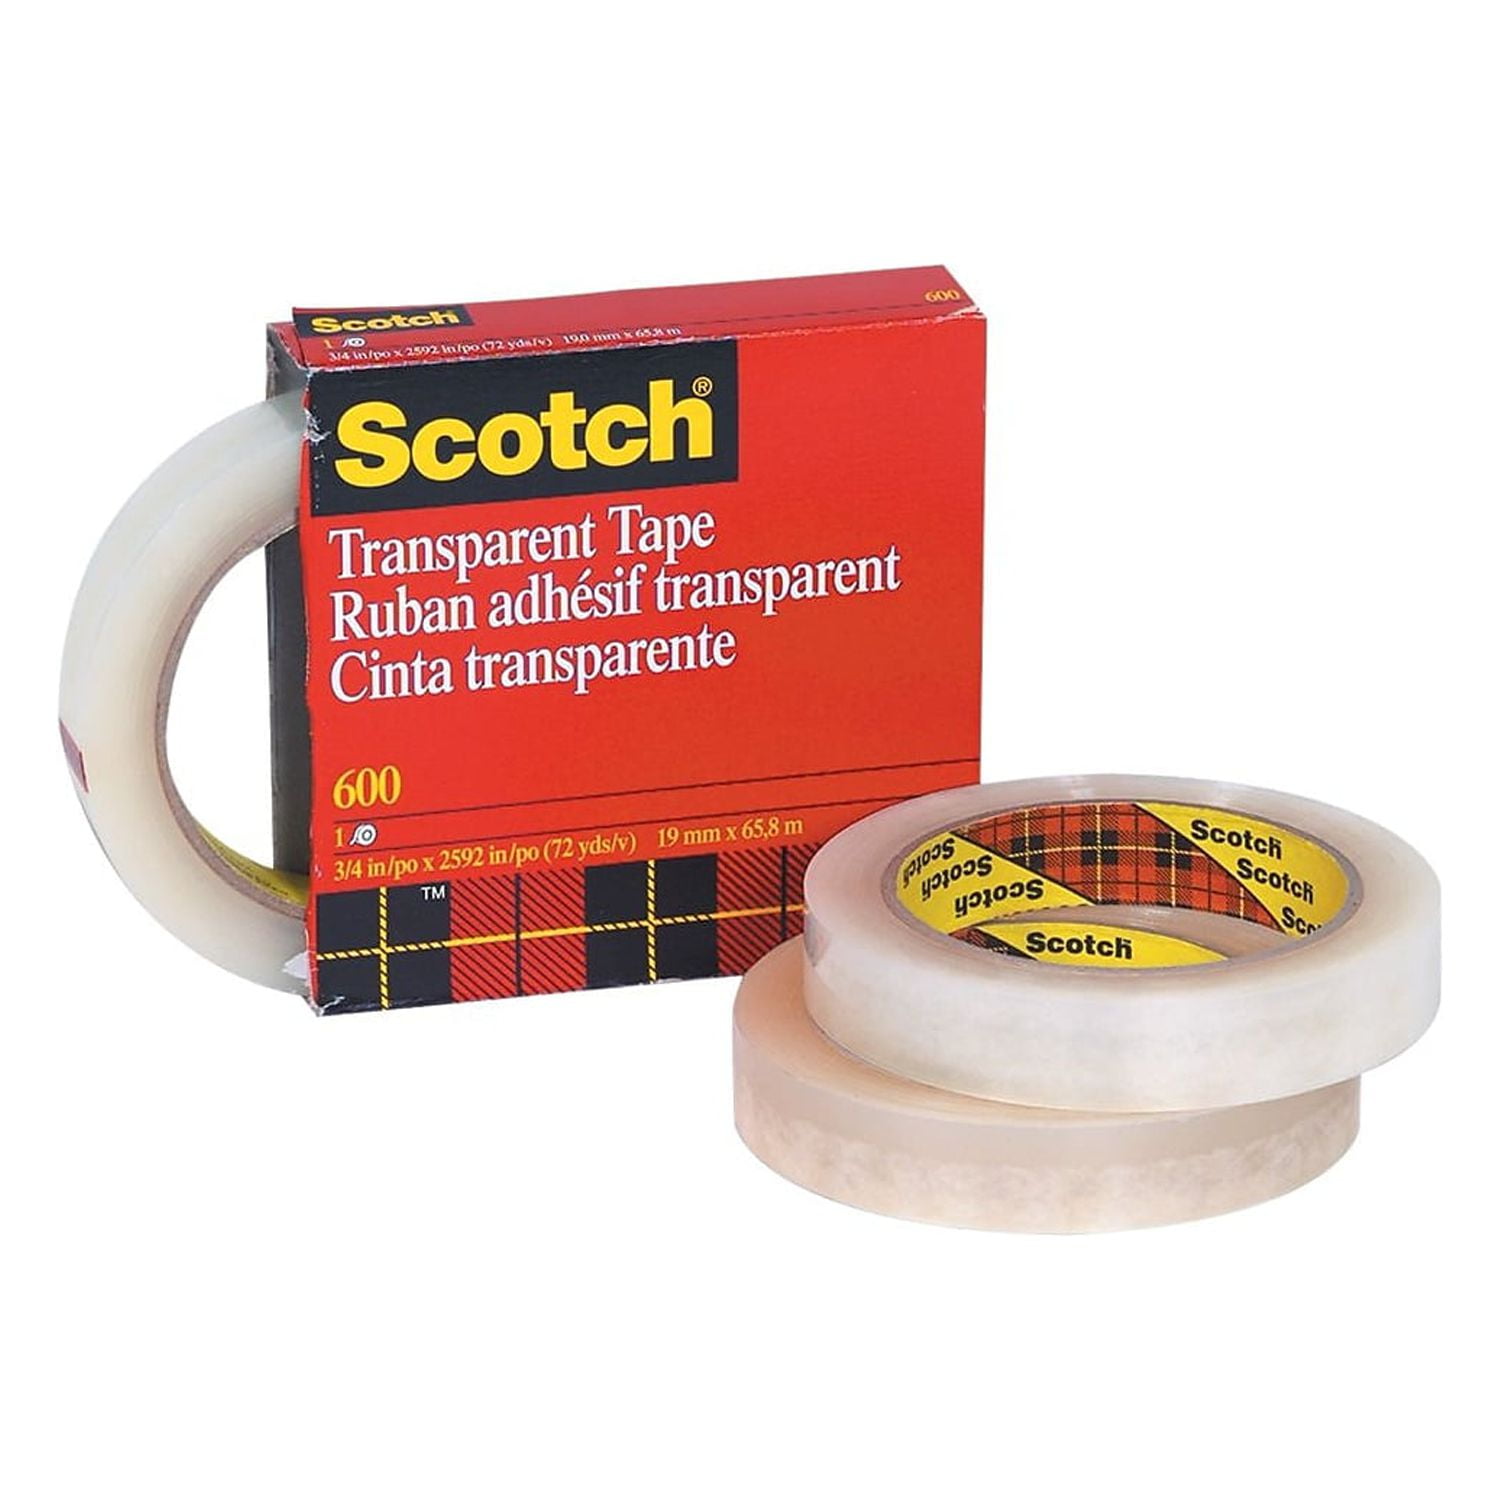 Scotch T96560012pk 1 In. X 72 Yards Transparent 600 Multitask Tape, Pack Of 12 - 12 Per Case